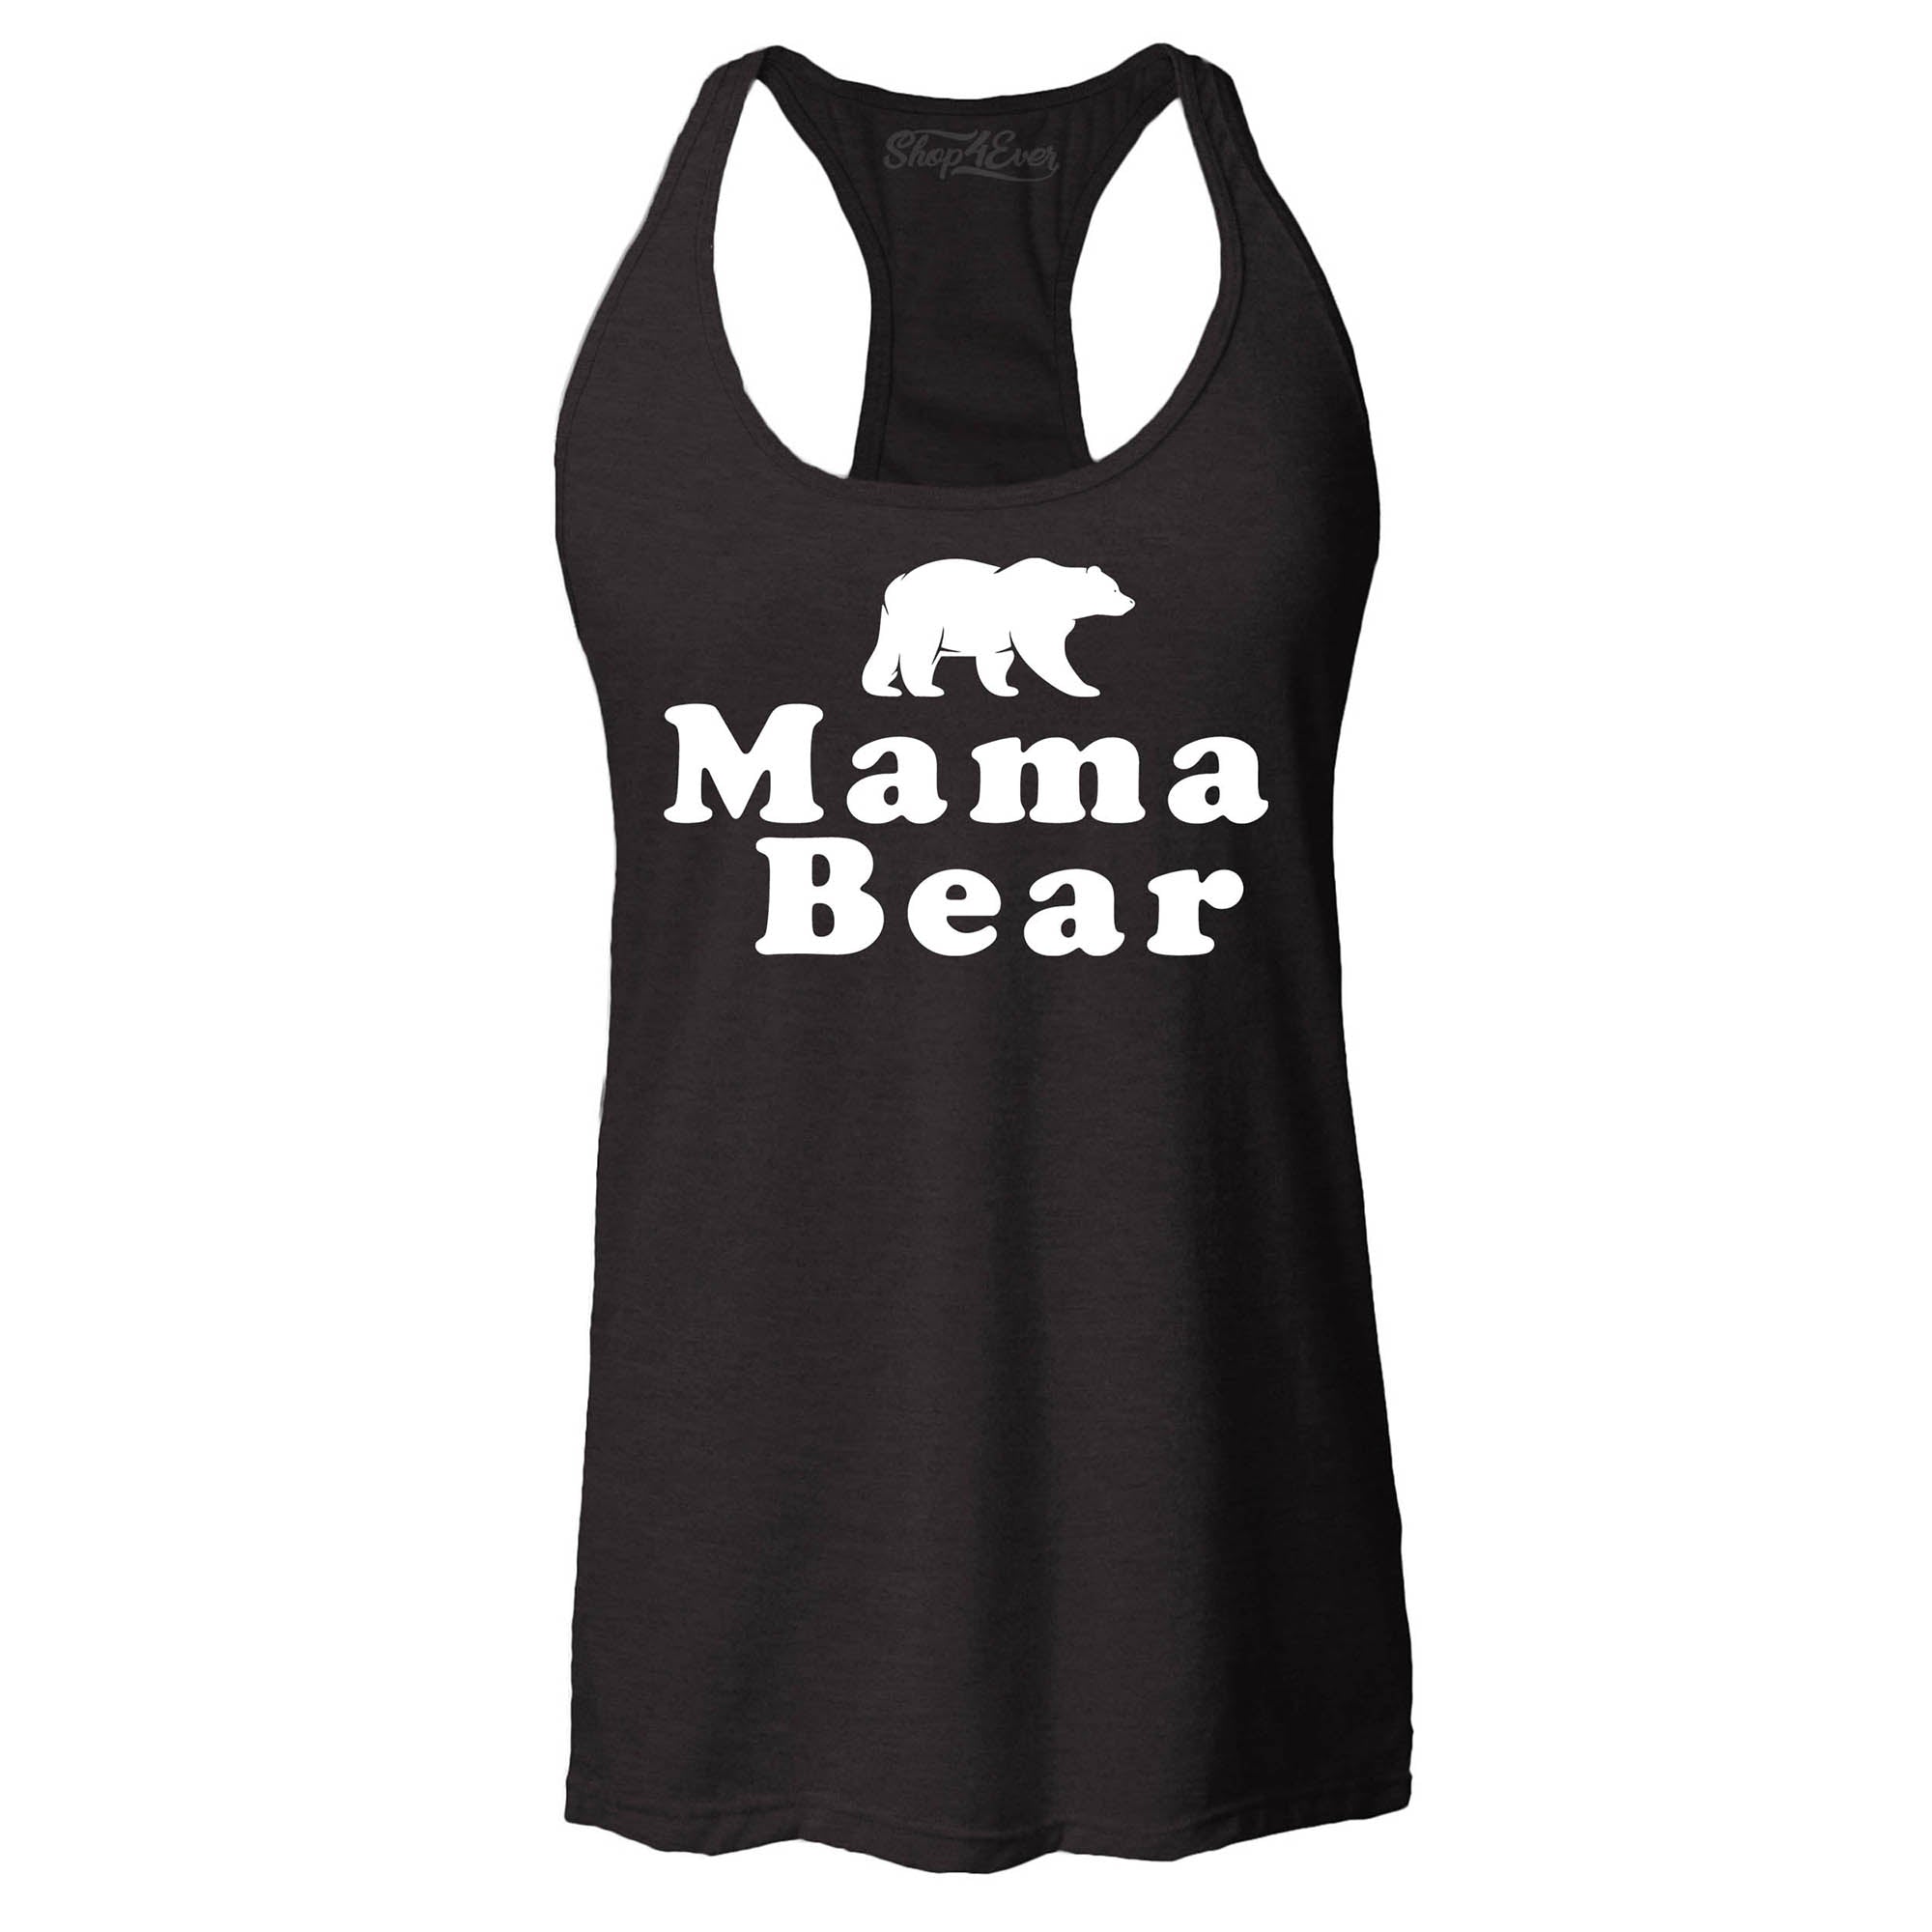 Mama Bear Women's Racerback Tank Top Slim FIT